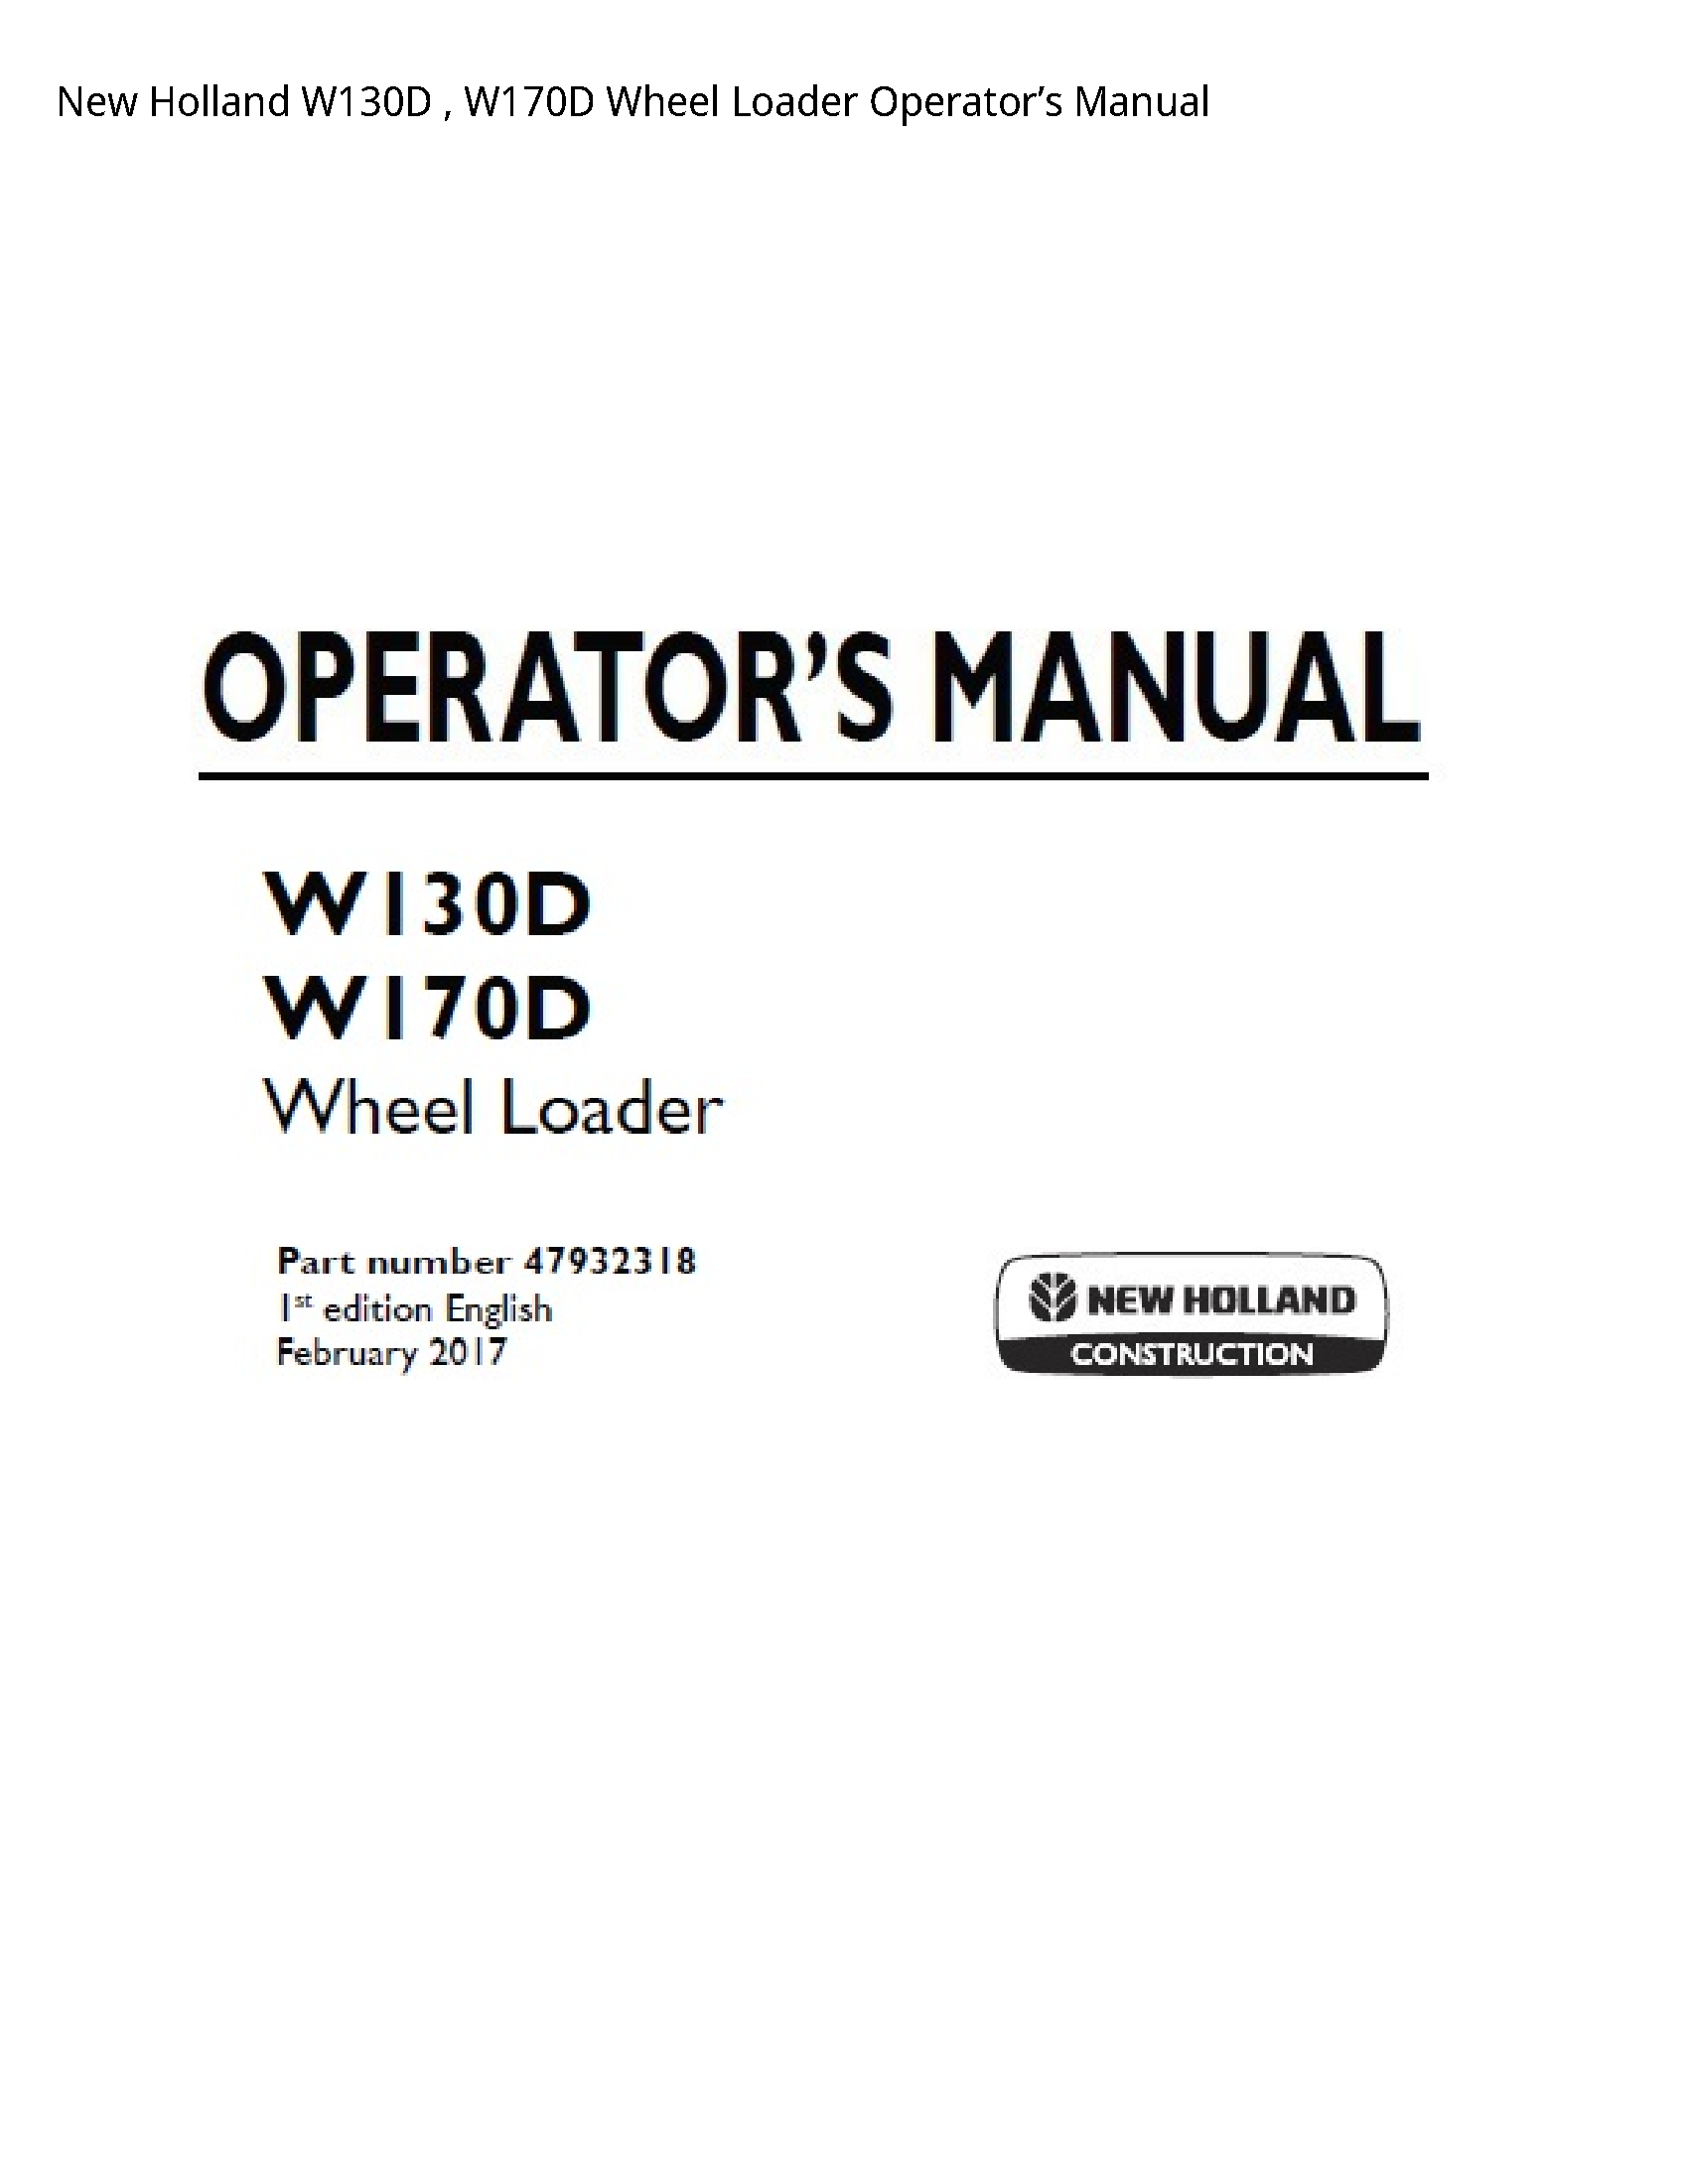 New Holland W130D Wheel Loader Operator’s manual